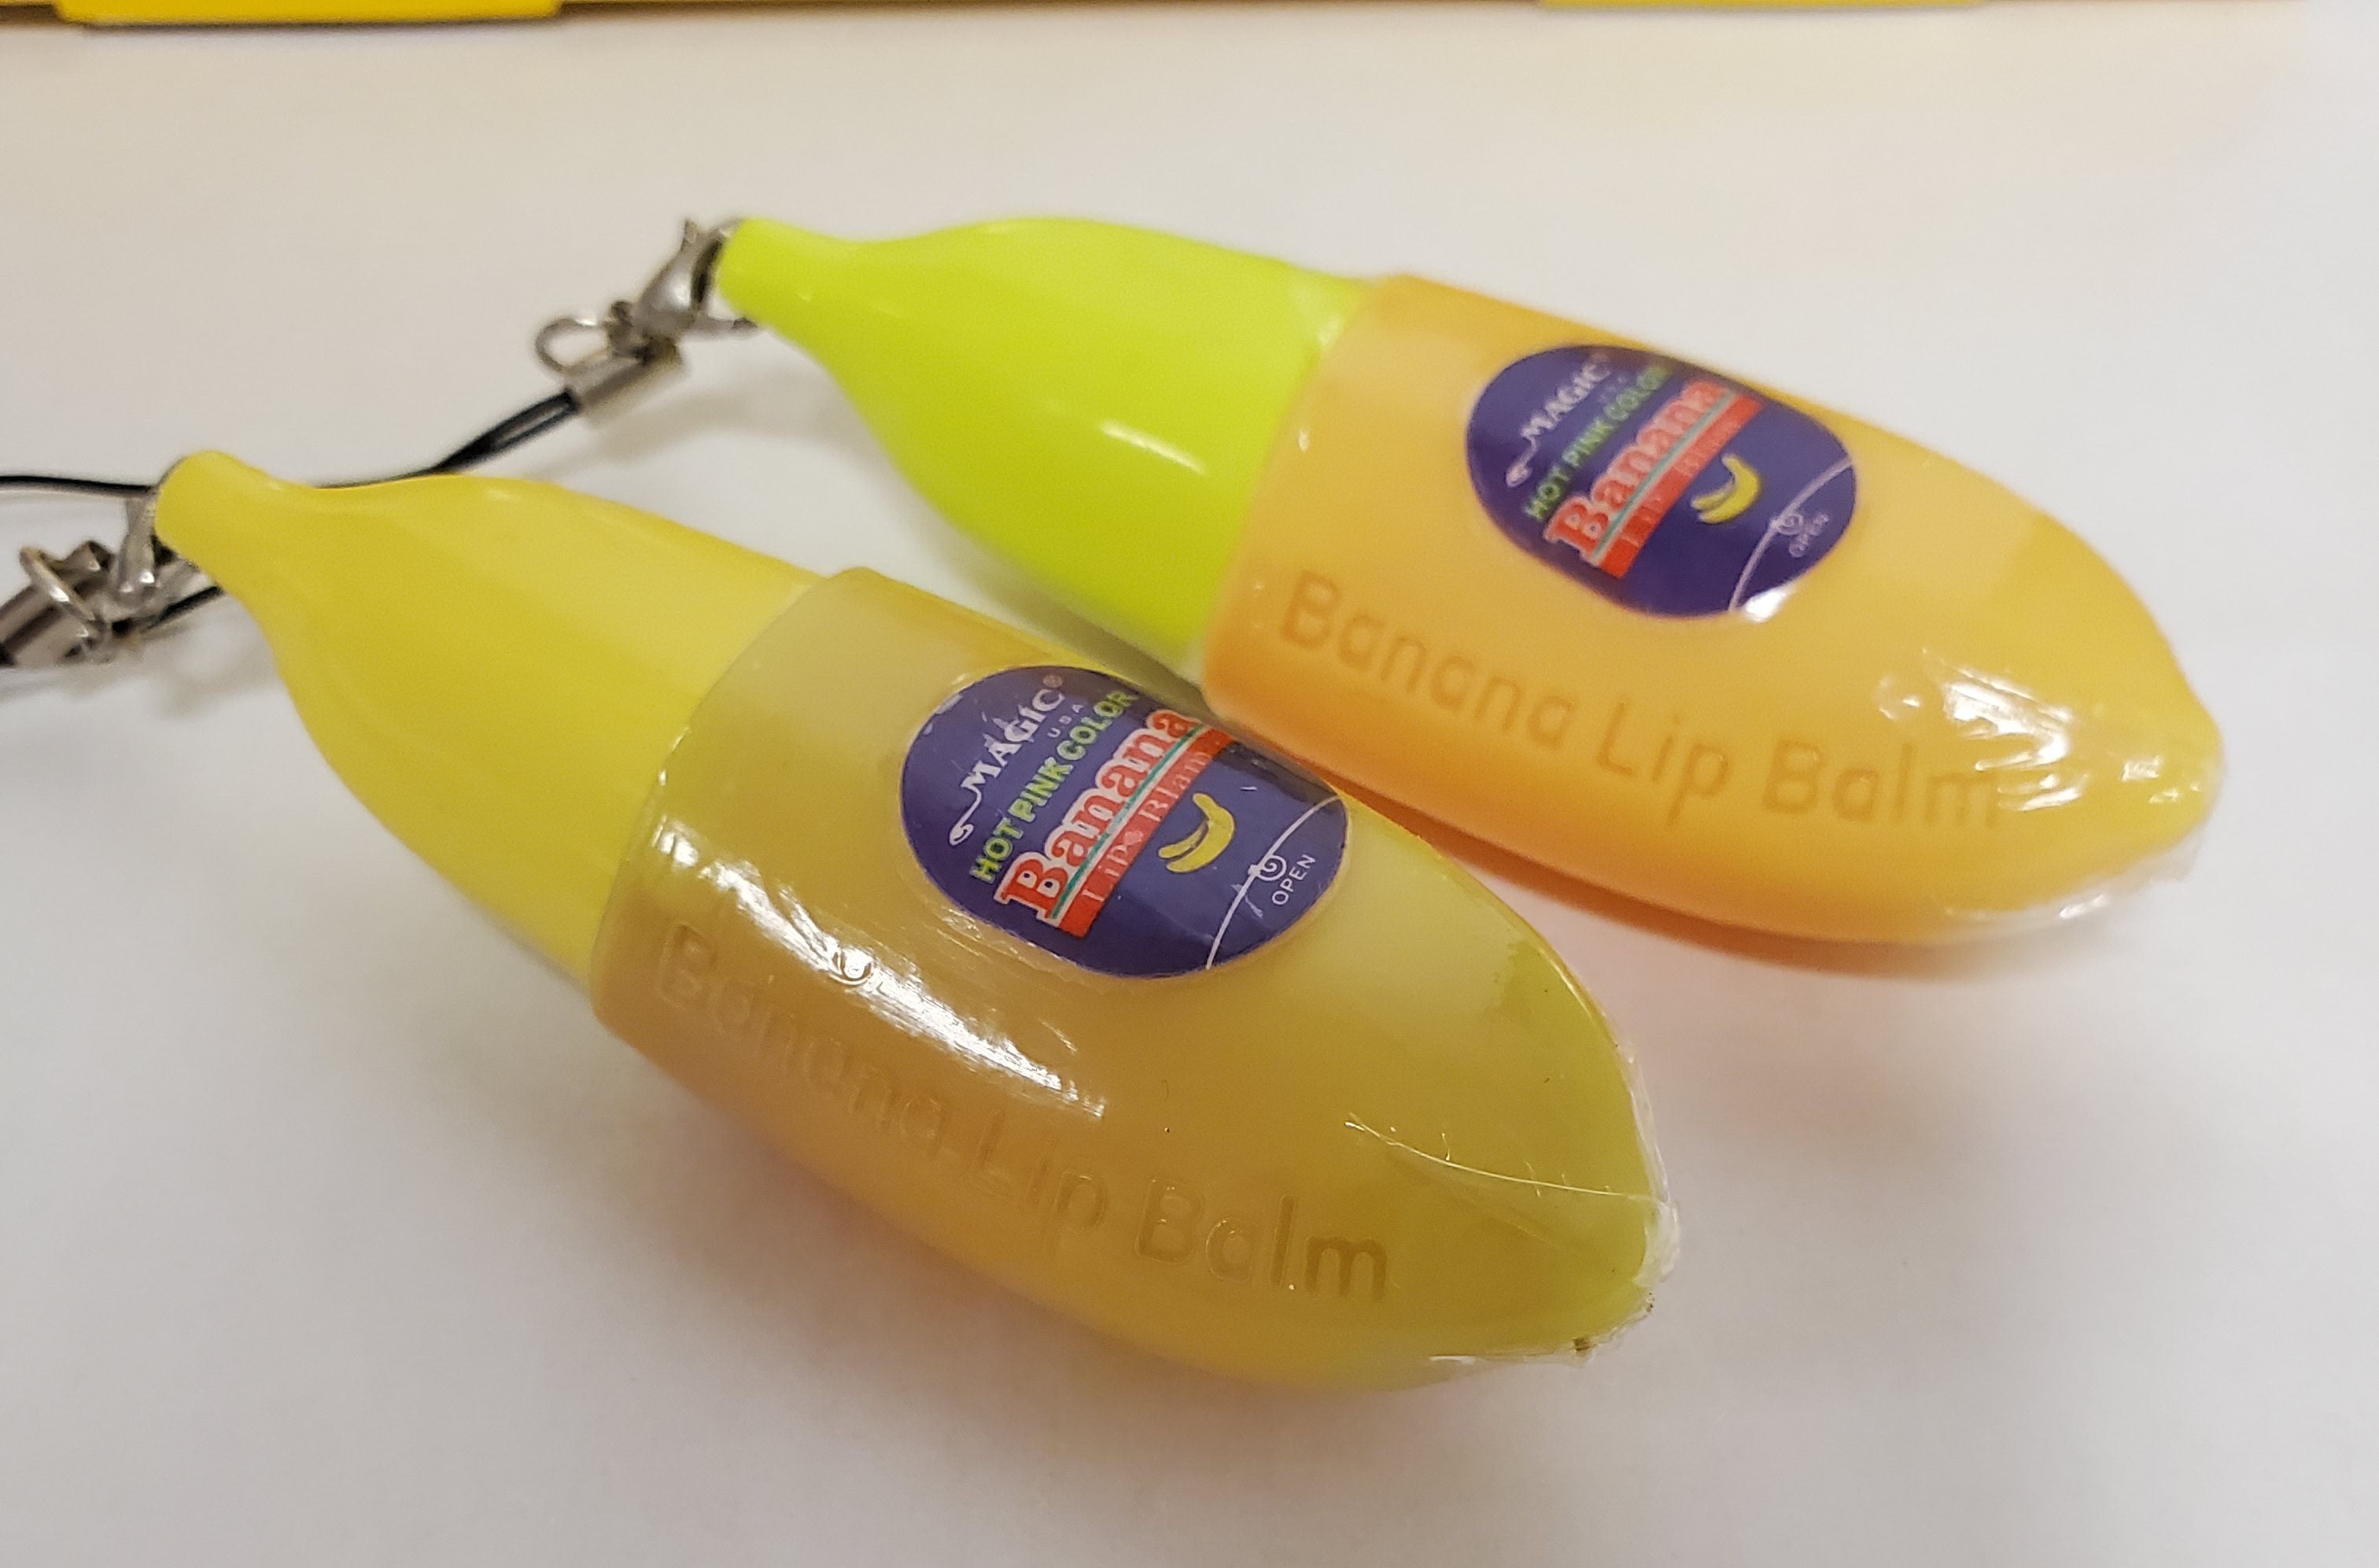 Banana Flavored Lip Balm / Gloss - Magic U.S.A.